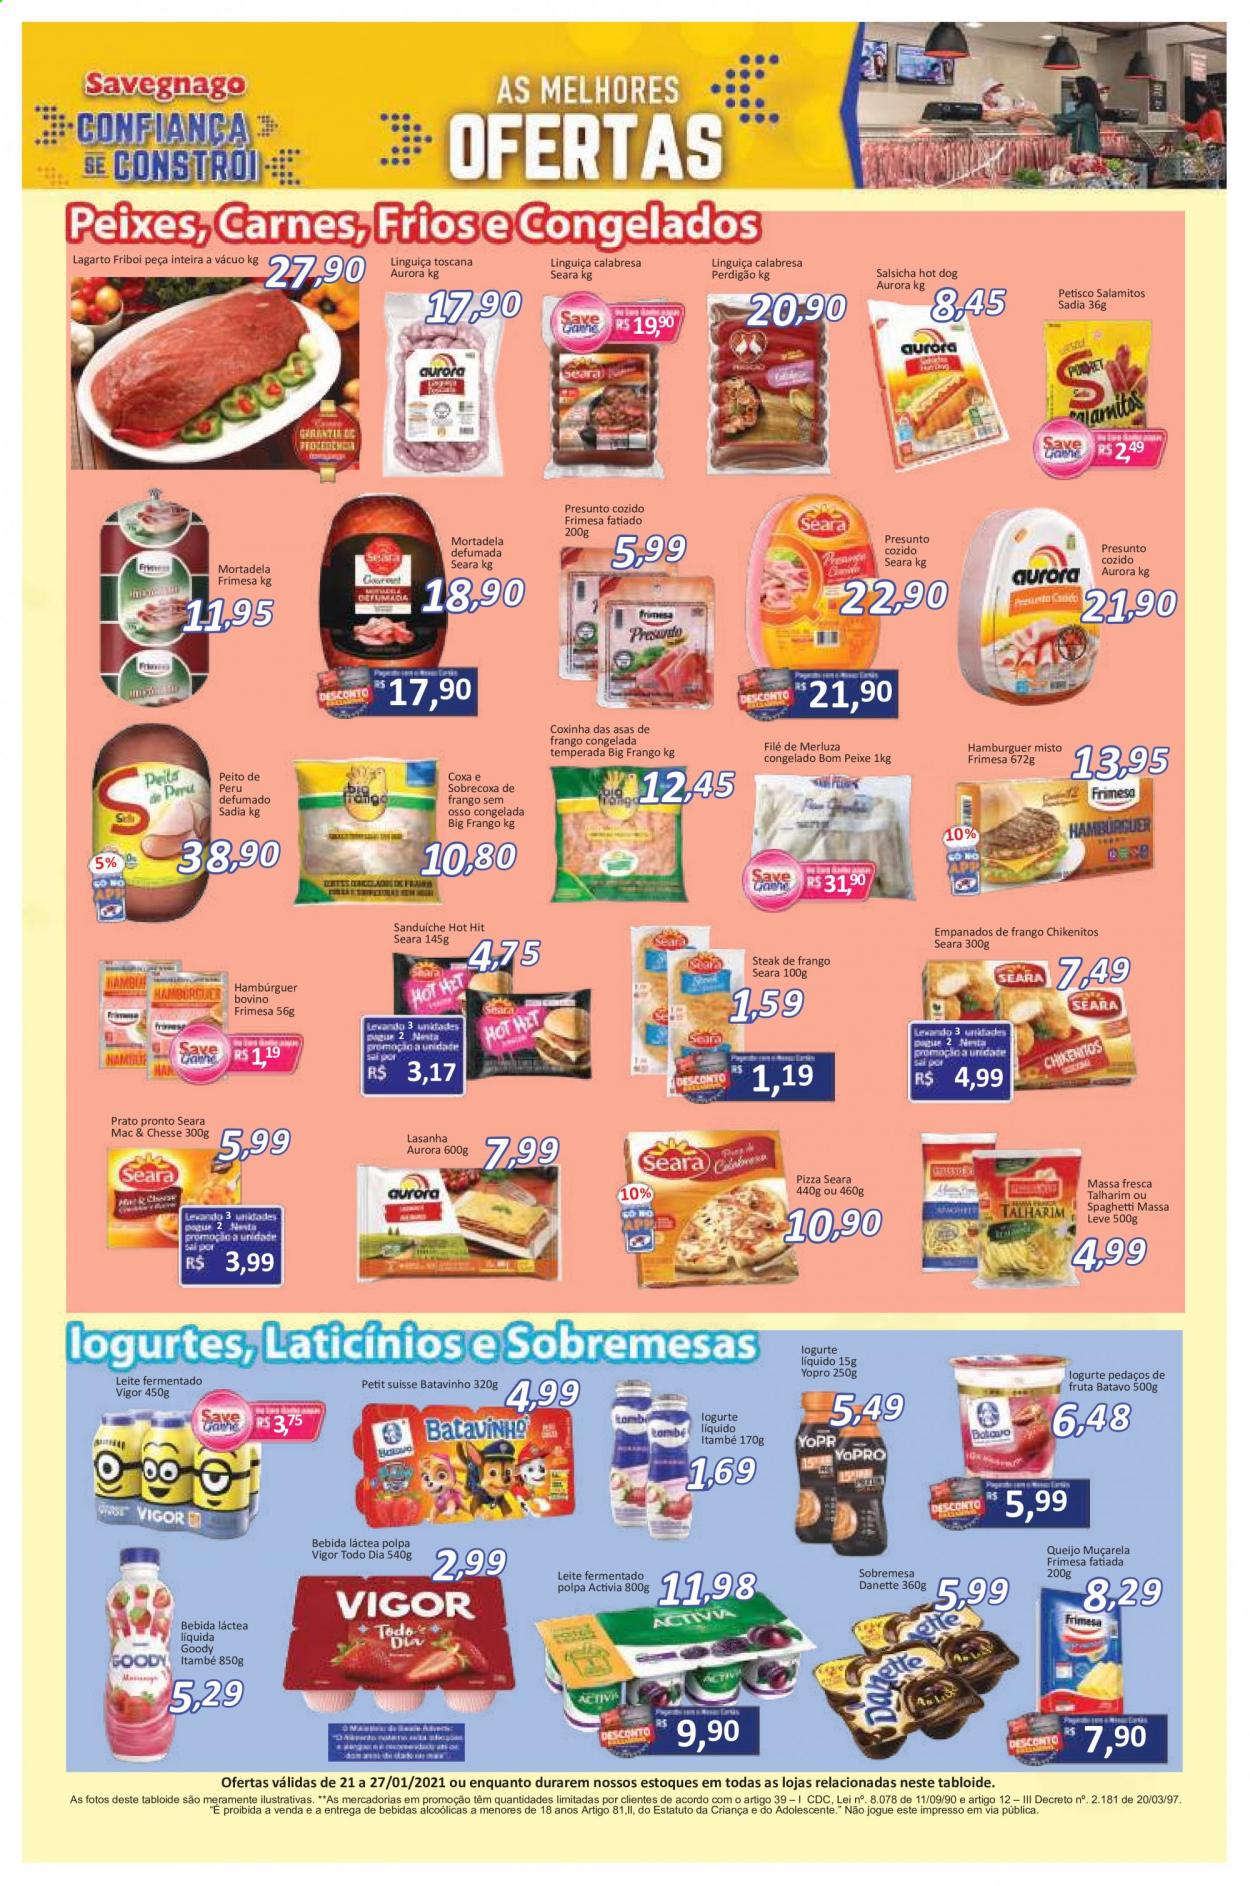 thumbnail - Folheto Savegnago - 21/01/2021 - 27/01/2021 - Produtos em promoção - Friboi, sanduiche, sobrecoxa, asa de frango, coxinha de asa, peito de peru, perú, Perdigão, perna de frango, steak, lombo de bovino, hamburger, merluza, Aurora, peixe, pizza, lasanha, prato pronto, crocantes de frango, empanado de frango, mortadela, linguiça, salsicha, linguiça calabresa, linguiça toscana, queijo, mozzarella, Vigor, Petit Suisse, Activia, Danette, Yopro, bebida lactea, leite fermentado, spaghetti, bebida, prato. Página 4.